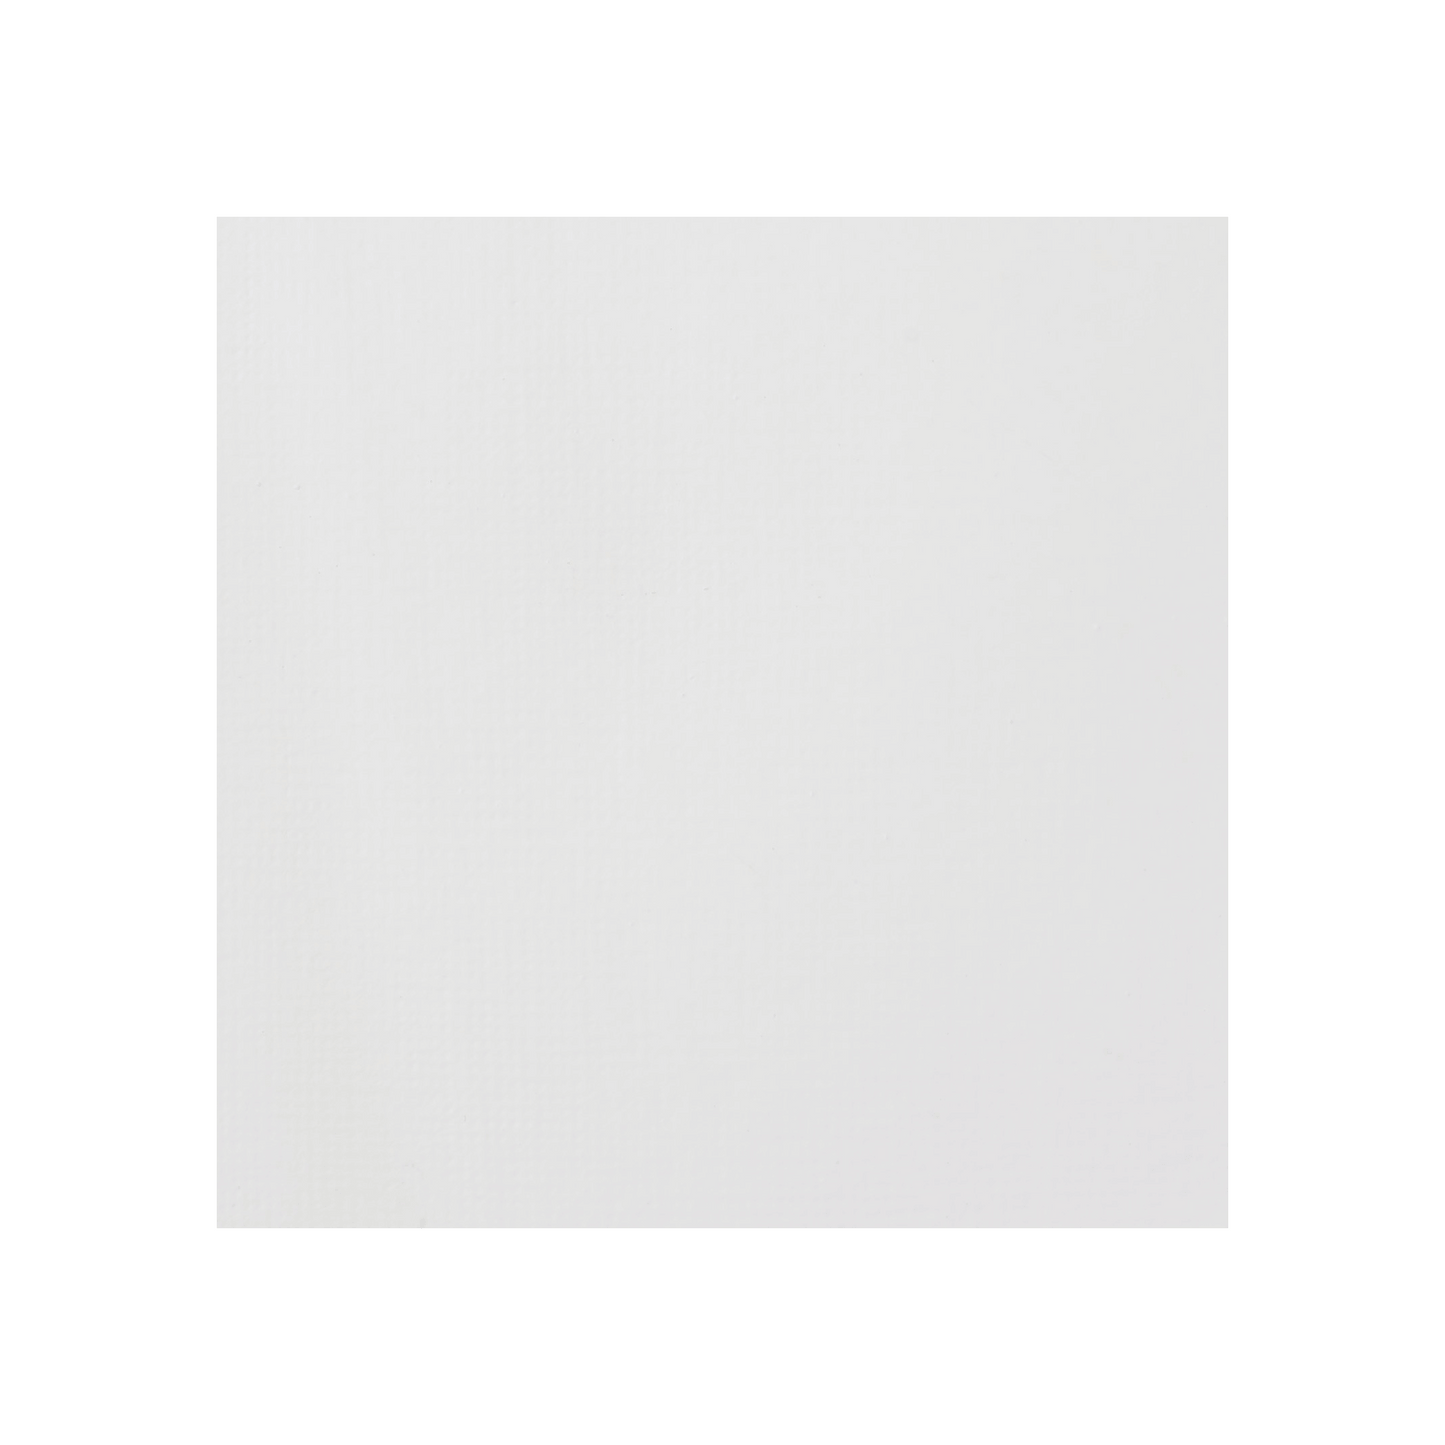 Liquitex Professional Heavy Body Acrylic 59ml - Transparent Mixing White